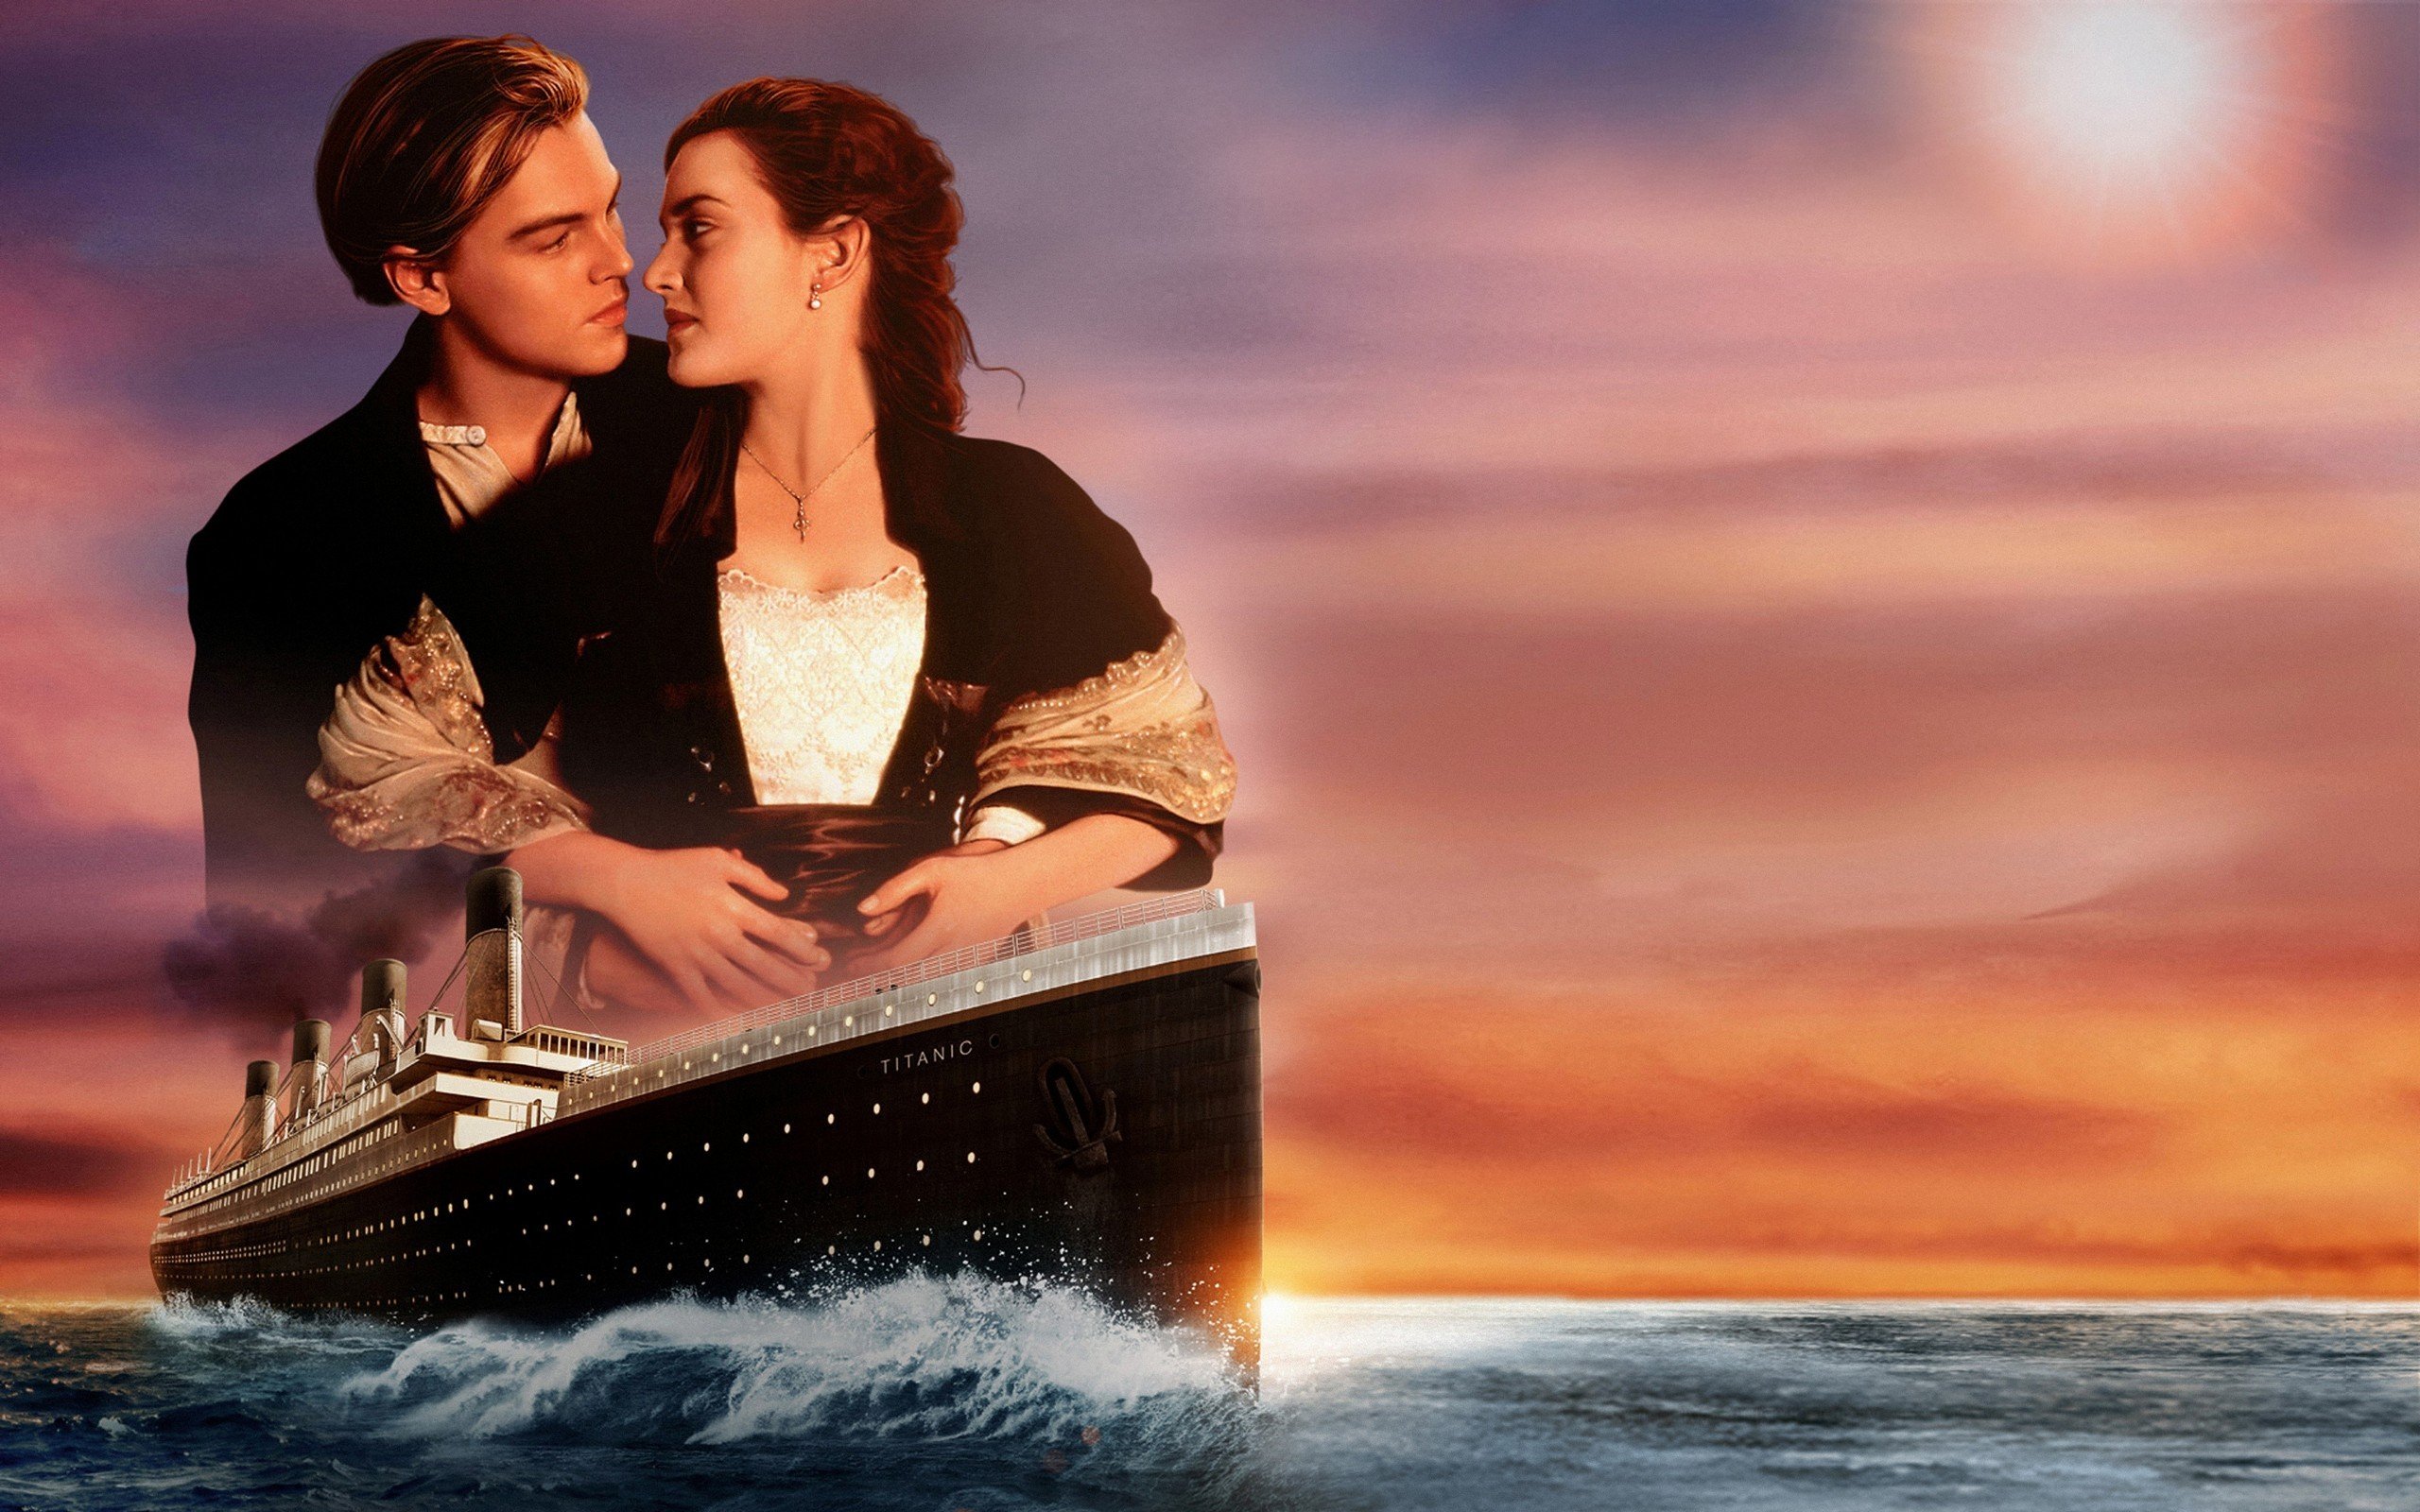 Dicaprio Kate Winslet Titanic Love Sunset Couple Jack Dawson Wallpaper